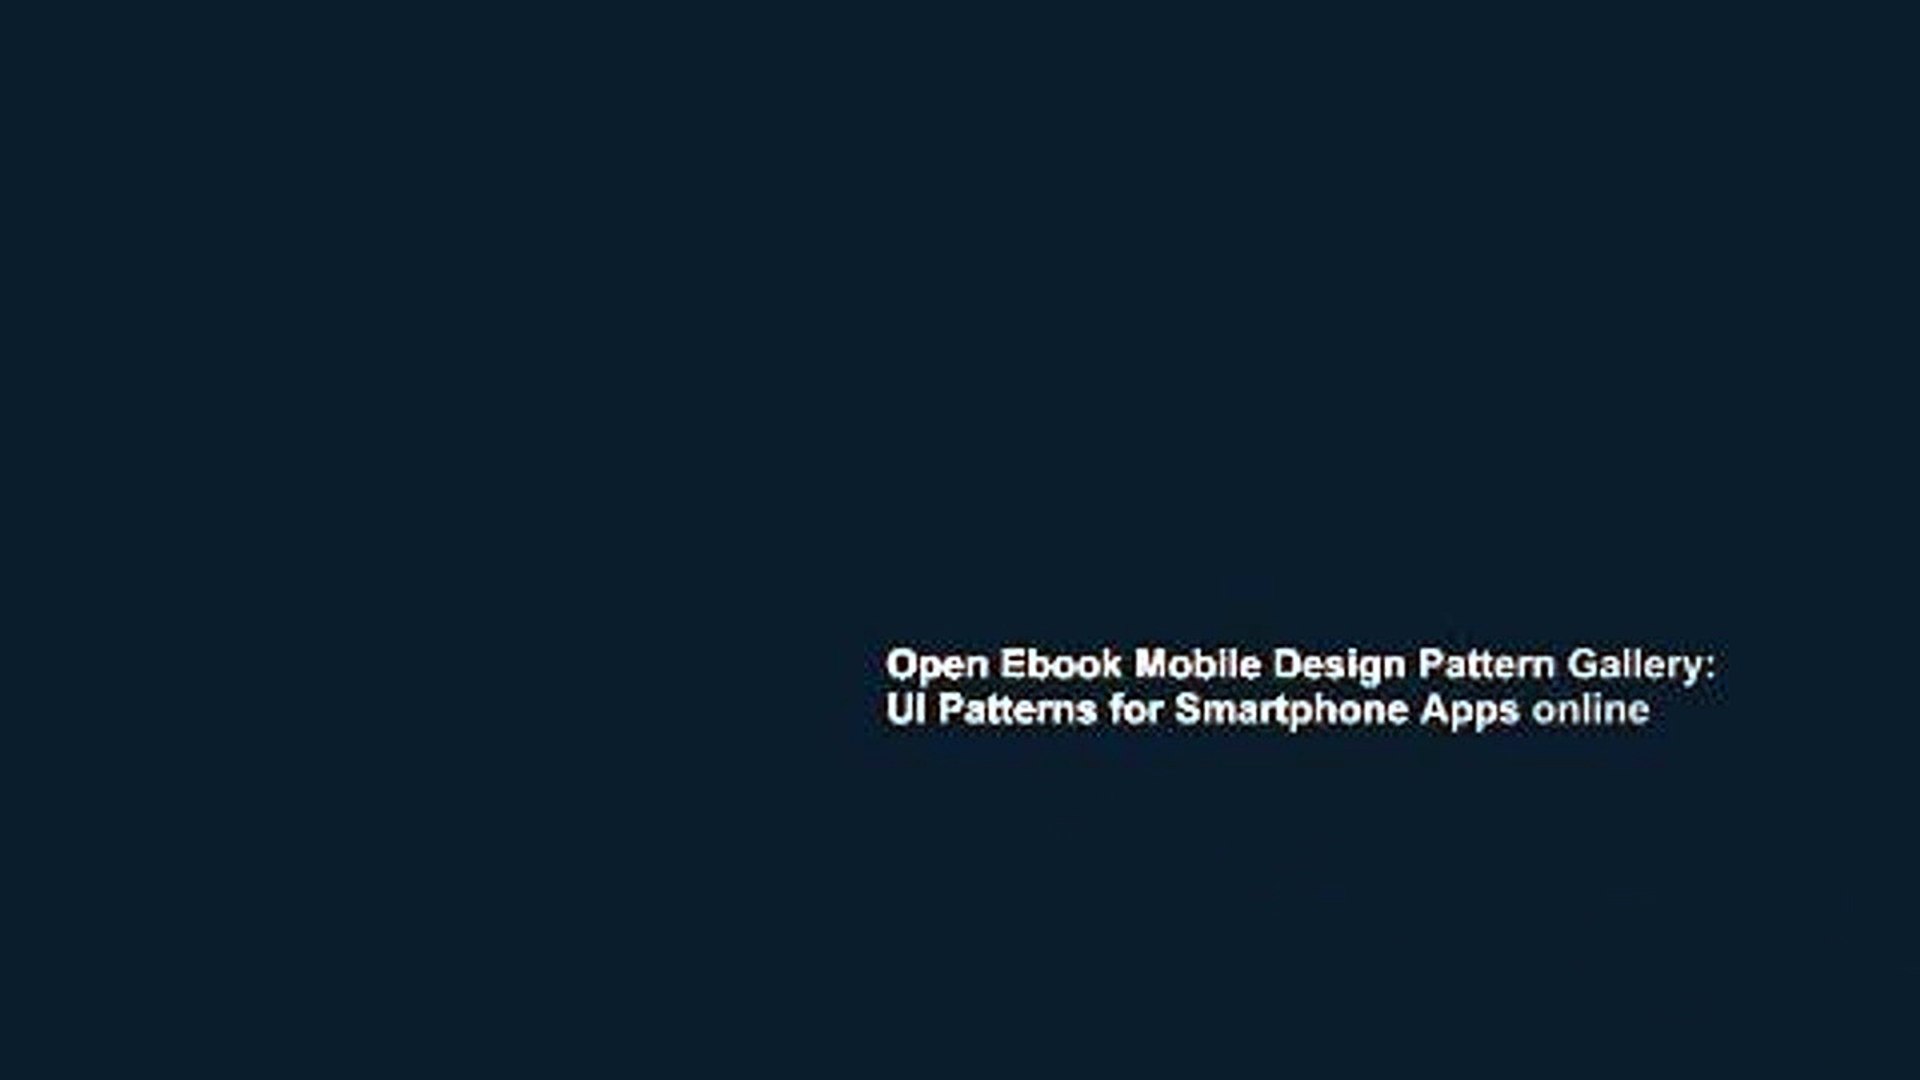 Open Ebook Mobile Design Pattern Gallery: UI Patterns for Smartphone Apps online